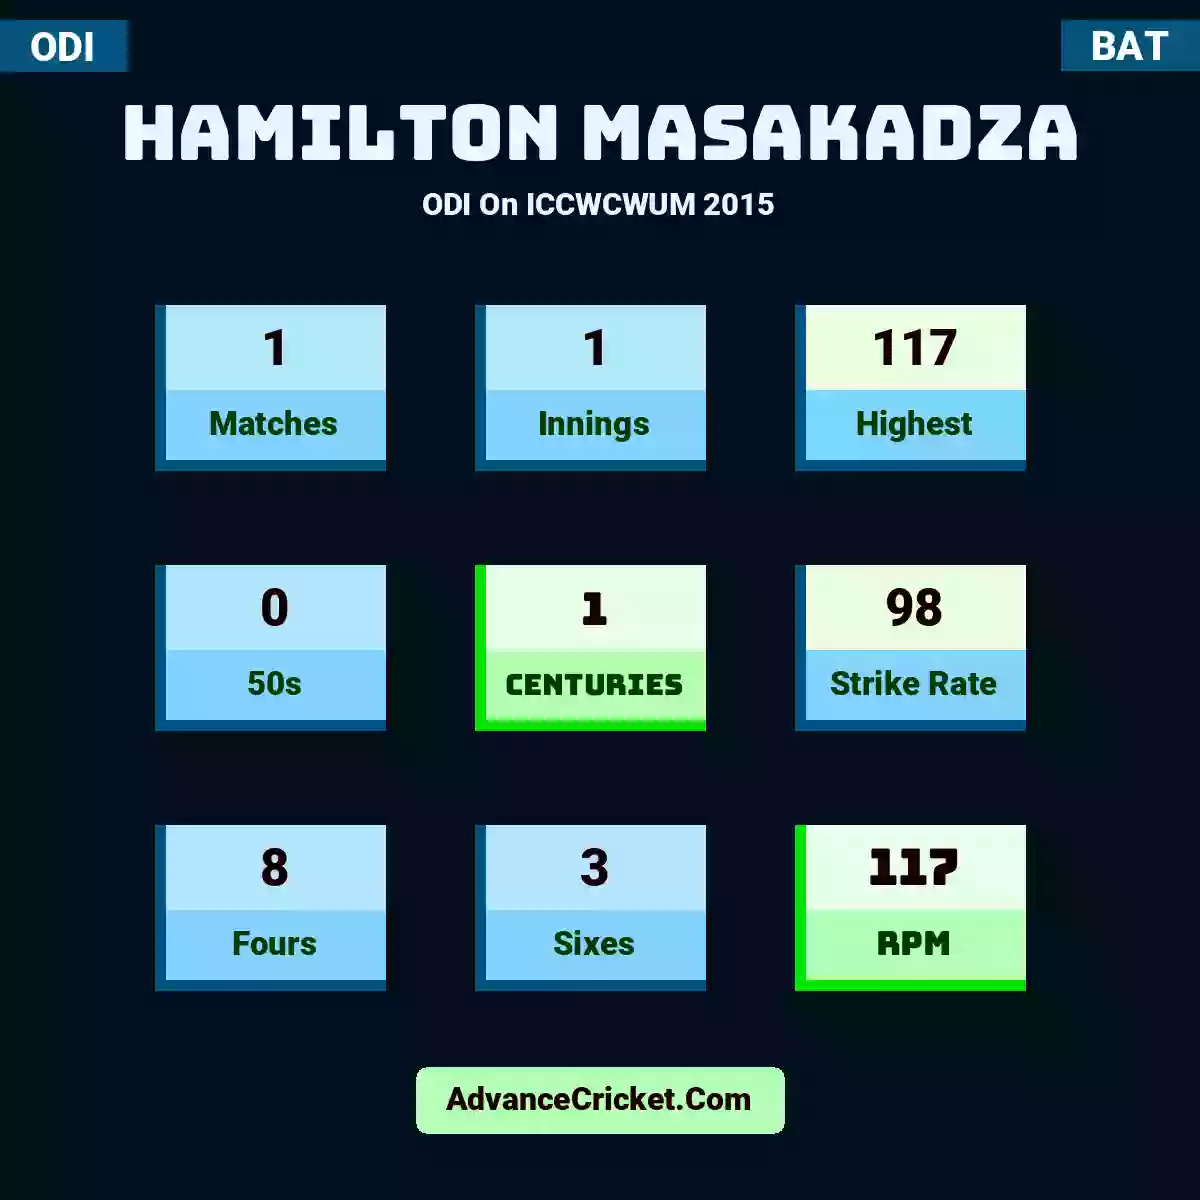 Hamilton Masakadza ODI  On ICCWCWUM 2015, Hamilton Masakadza played 1 matches, scored 117 runs as highest, 0 half-centuries, and 1 centuries, with a strike rate of 98. H.Masakadza hit 8 fours and 3 sixes, with an RPM of 117.